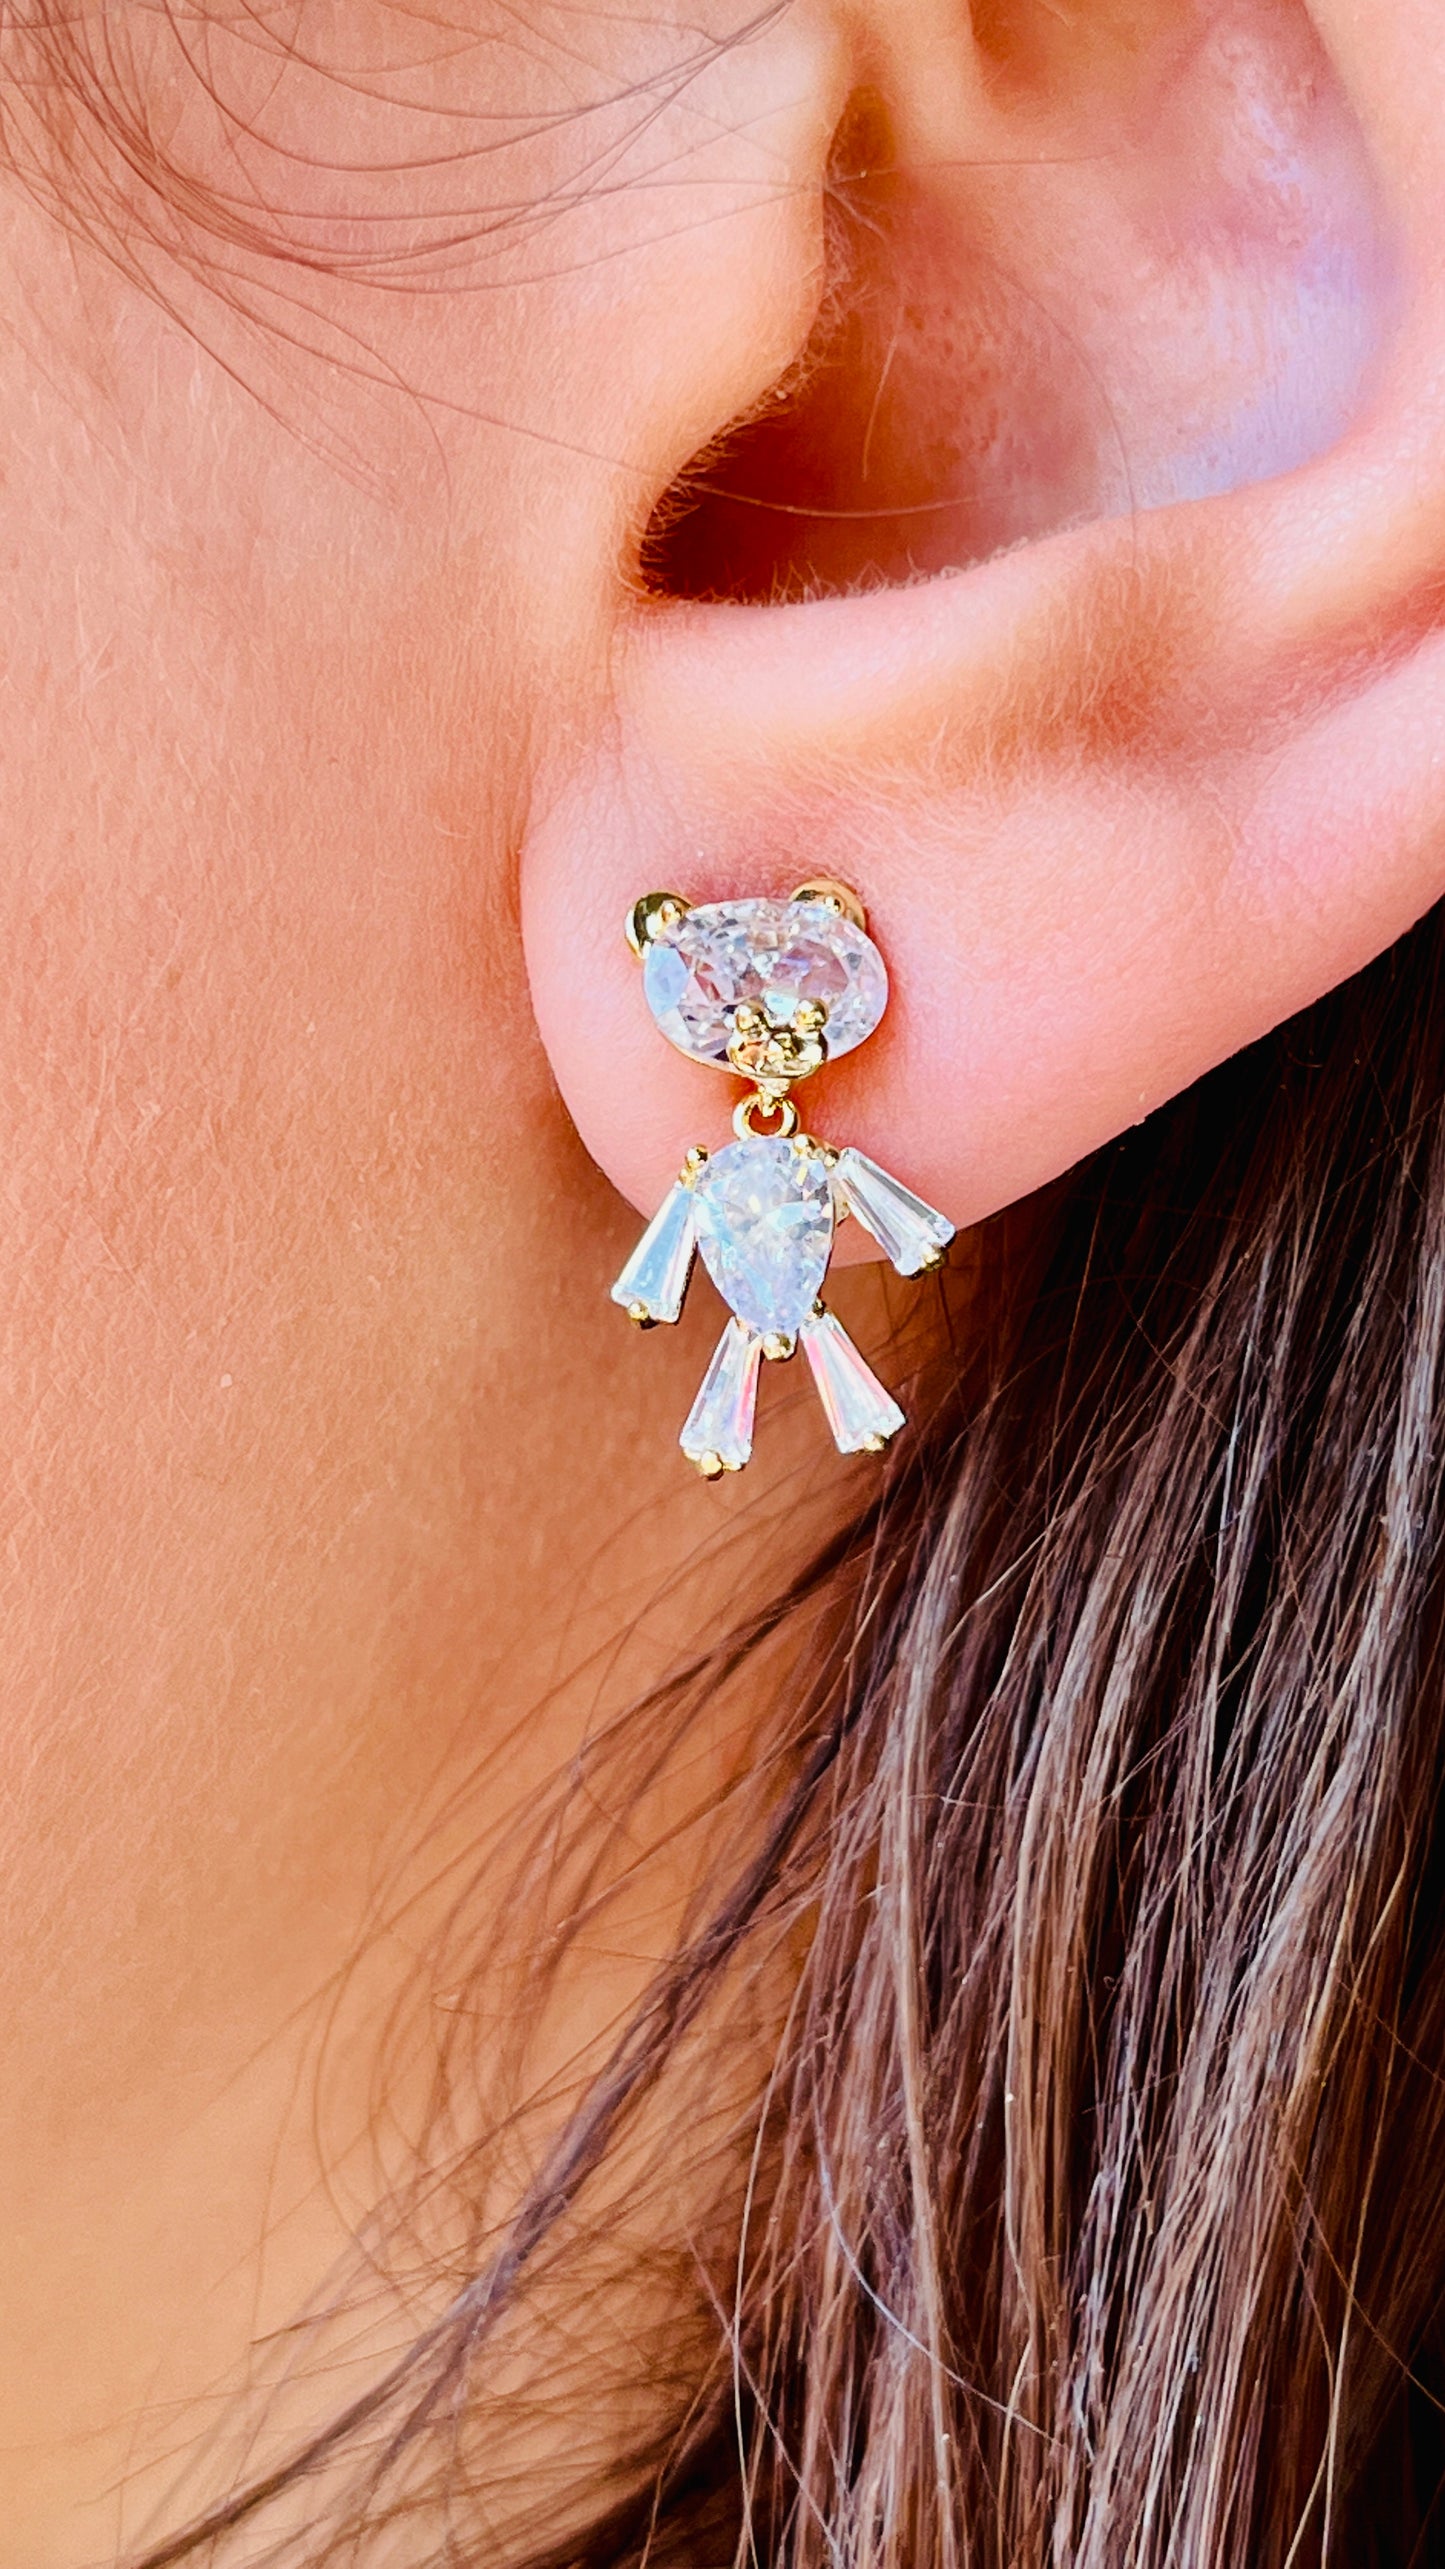 Shiny doll earring